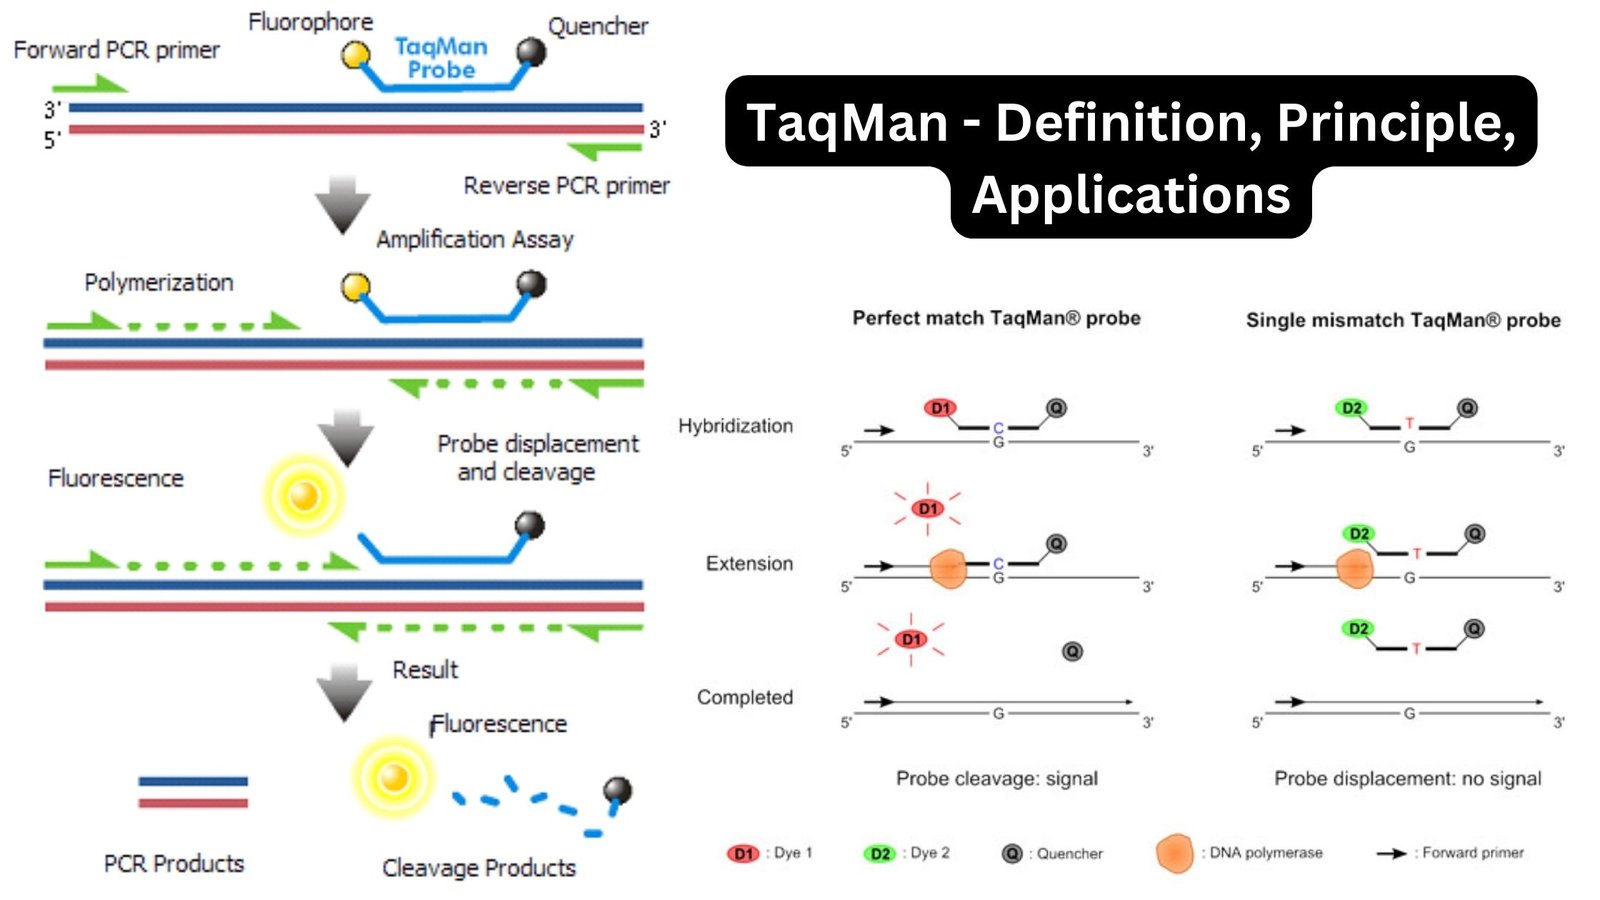 TaqMan - Definition, Principle, Applications